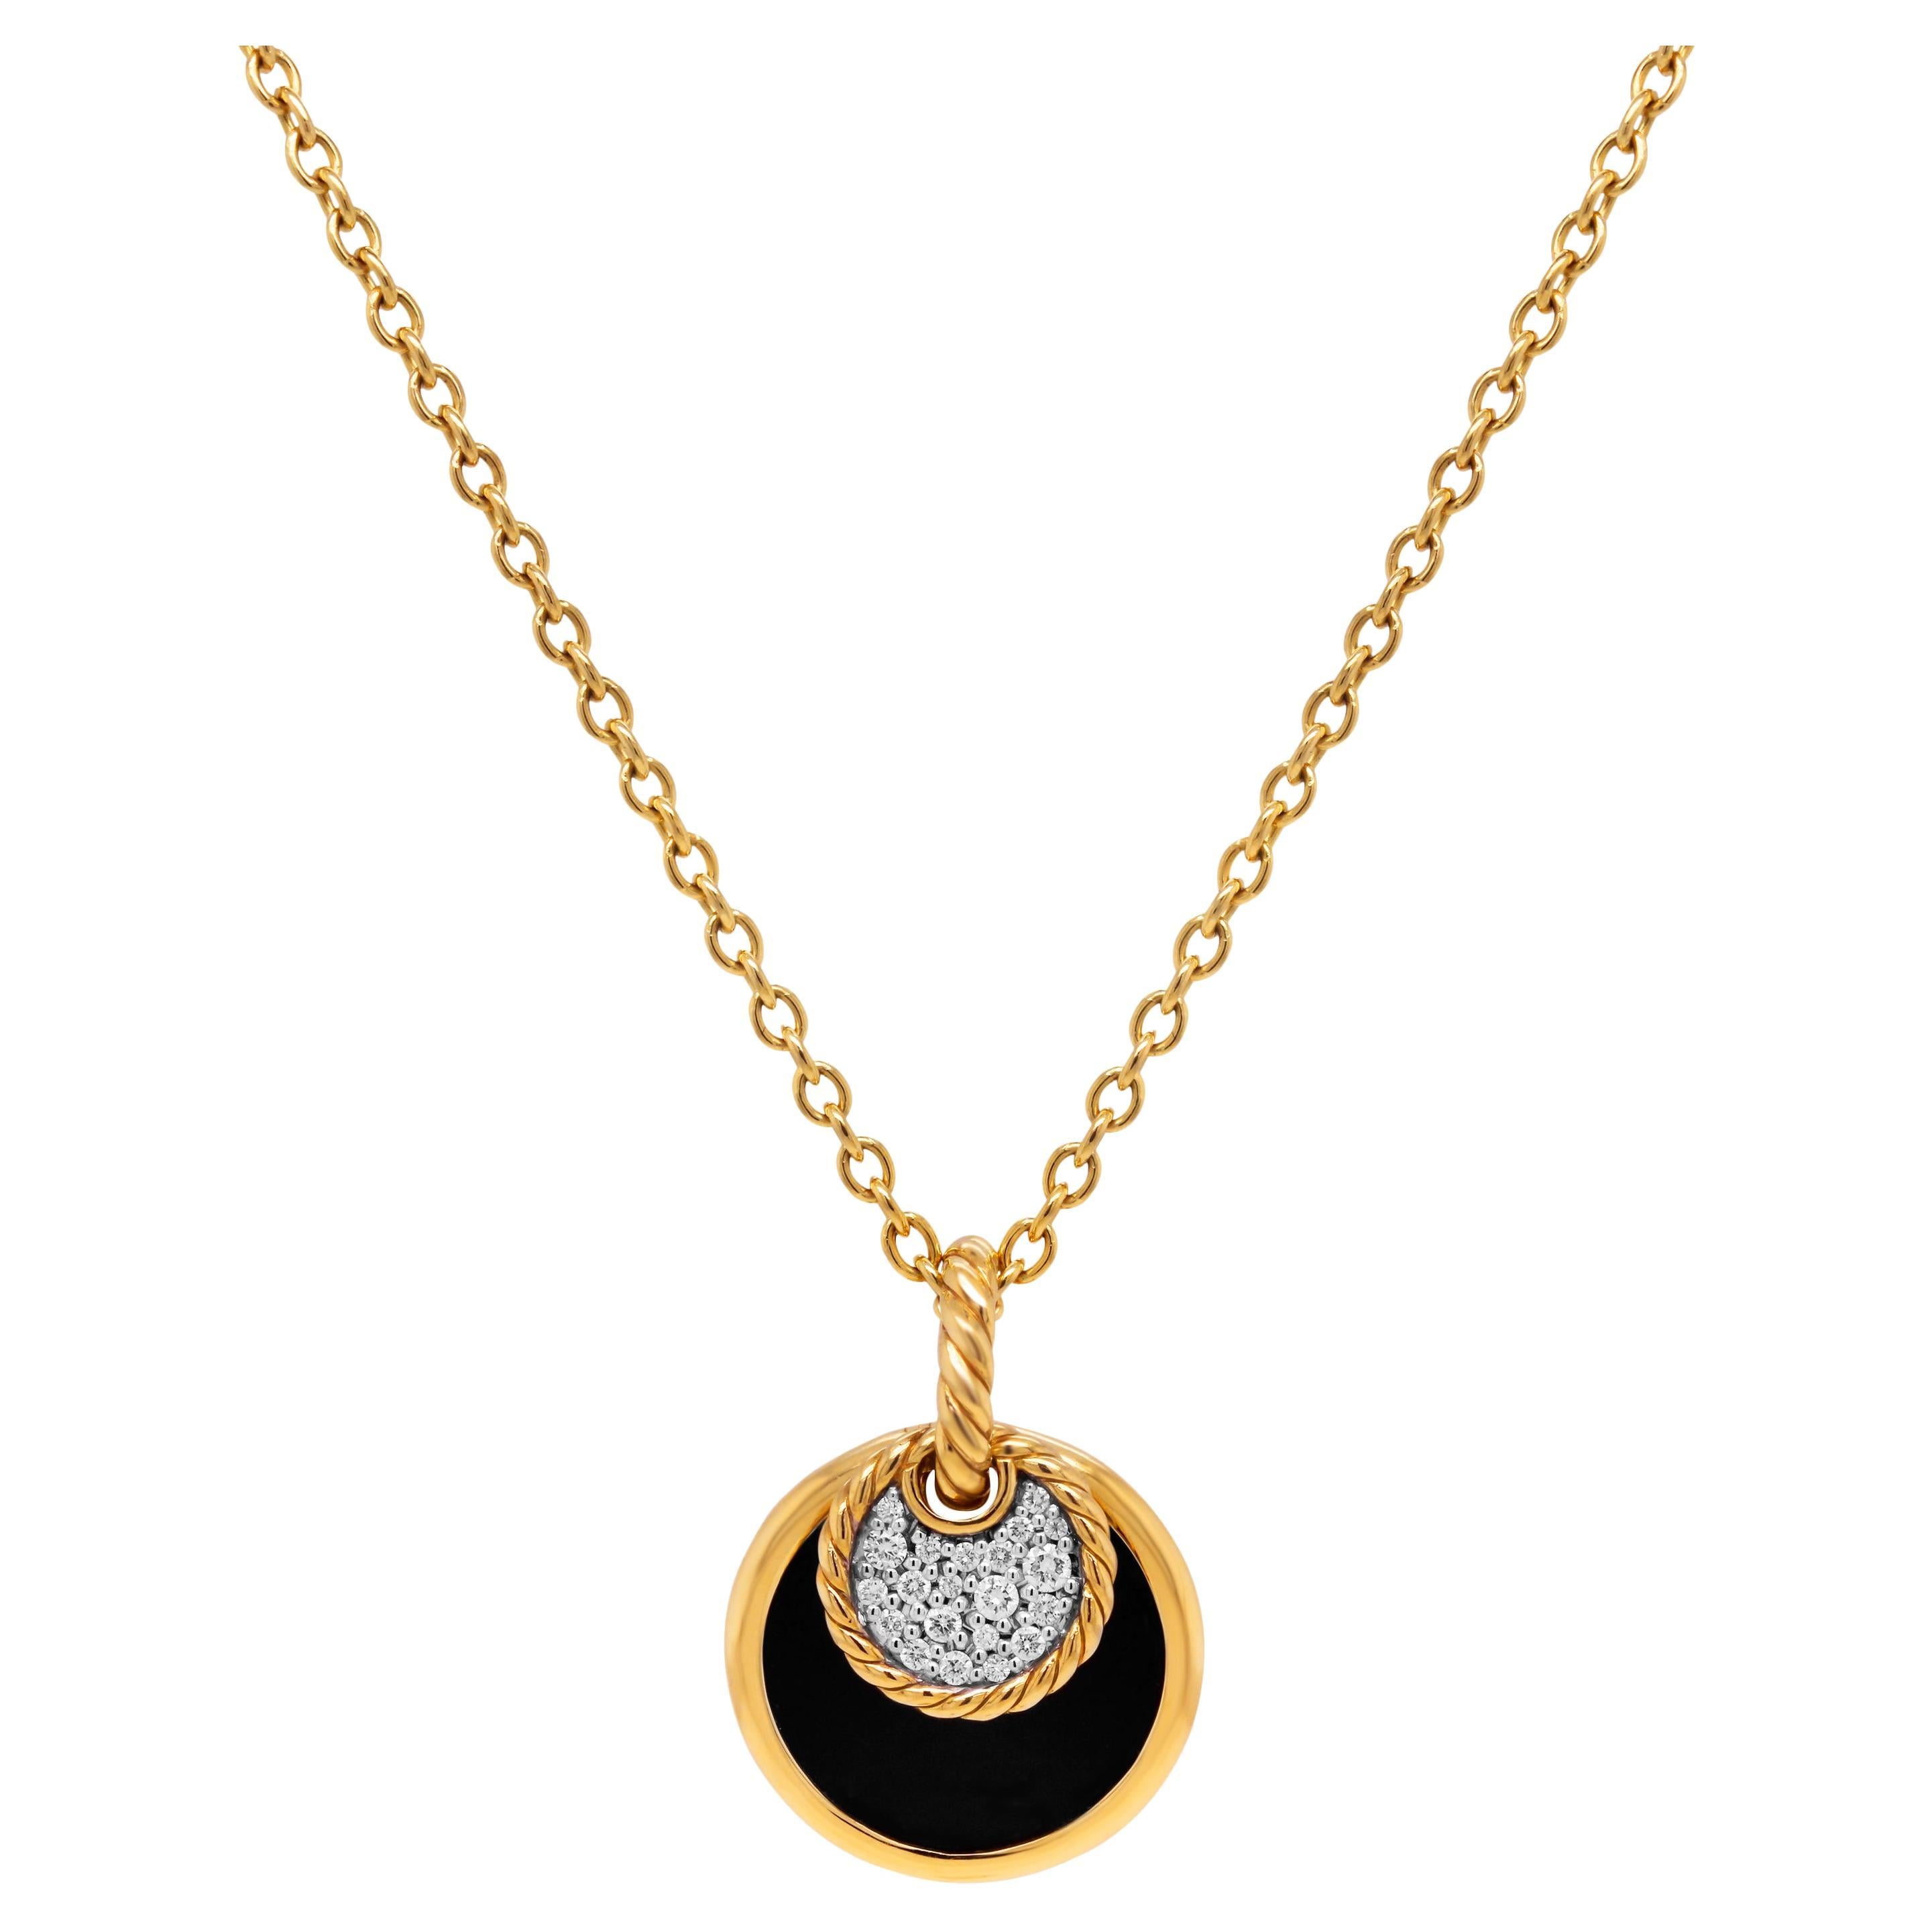 David Yurman 18K Gold DY Elements Onyx Mother of Pearl Diamond Pendant Necklace